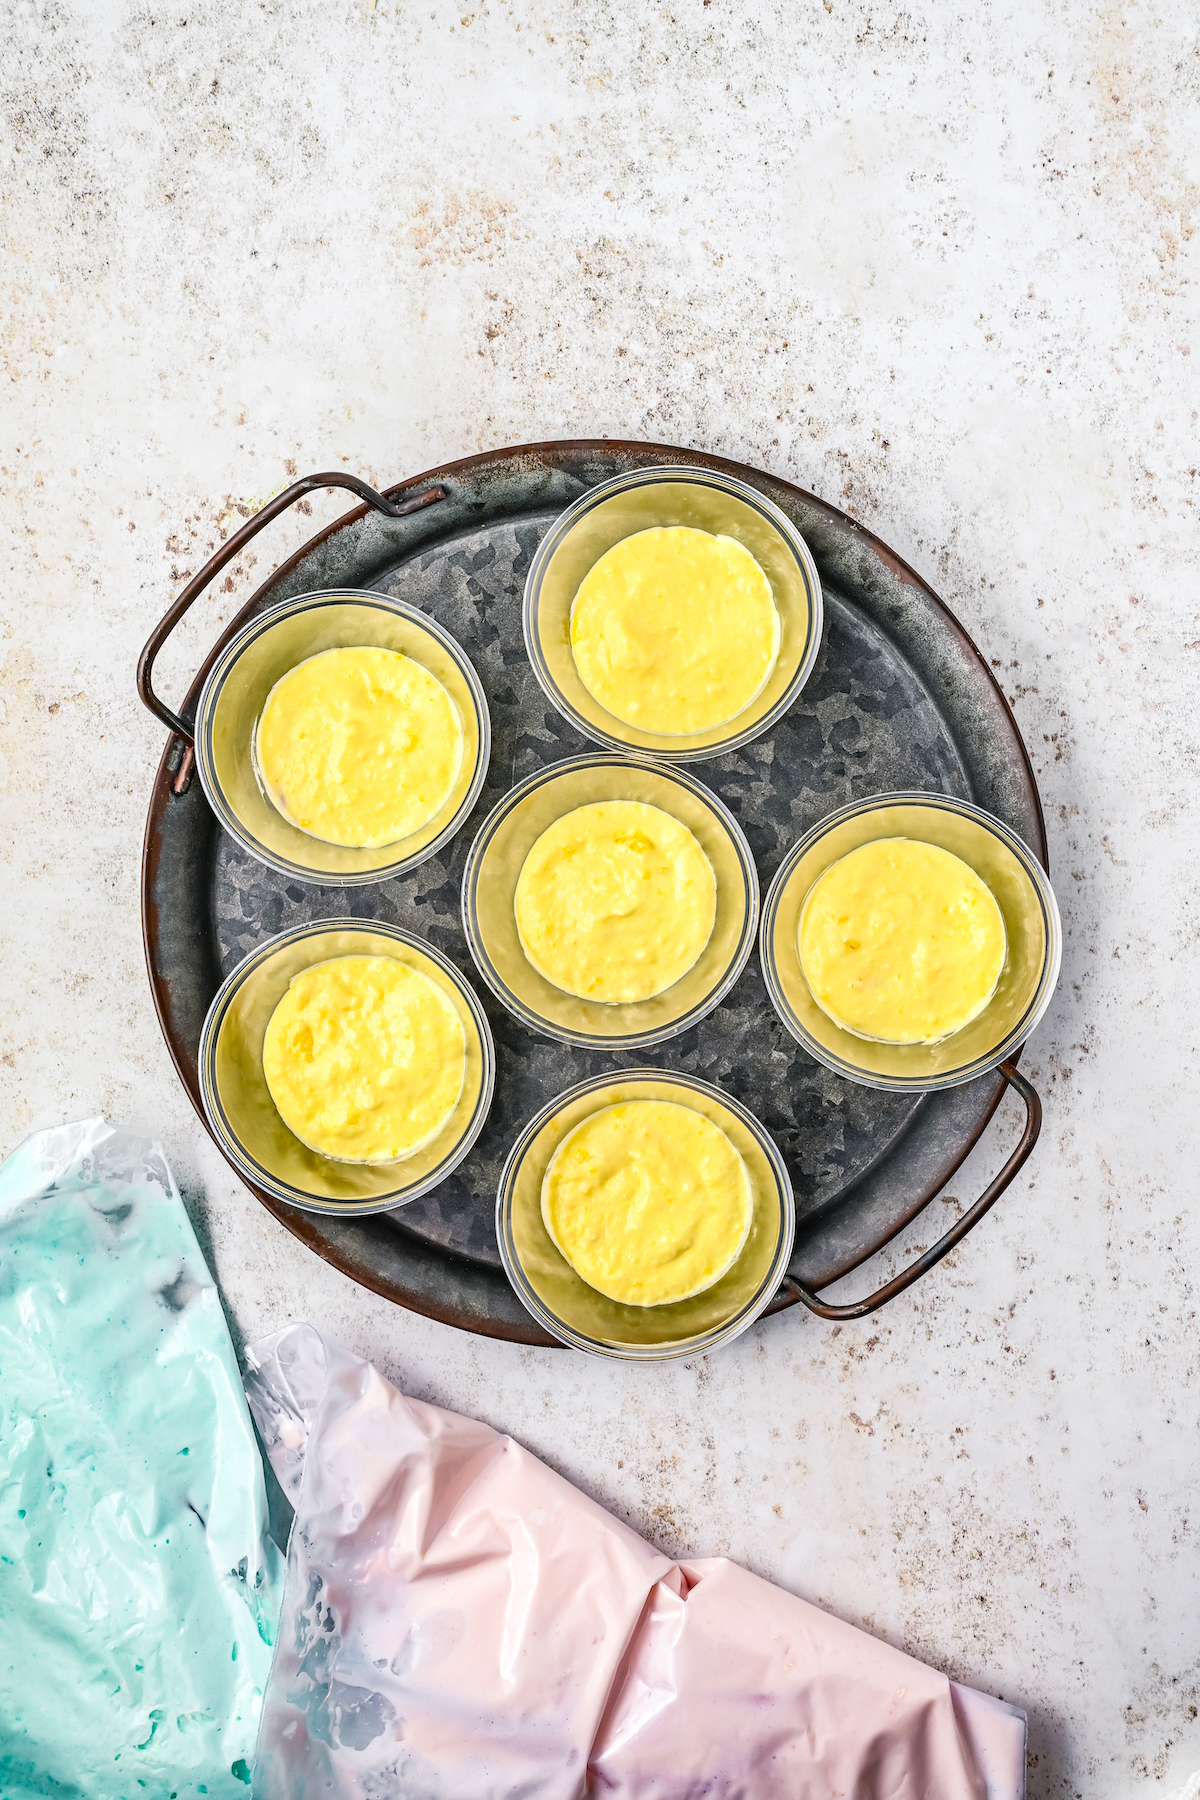 Creamy yellow Jello mixture in parfait cups.